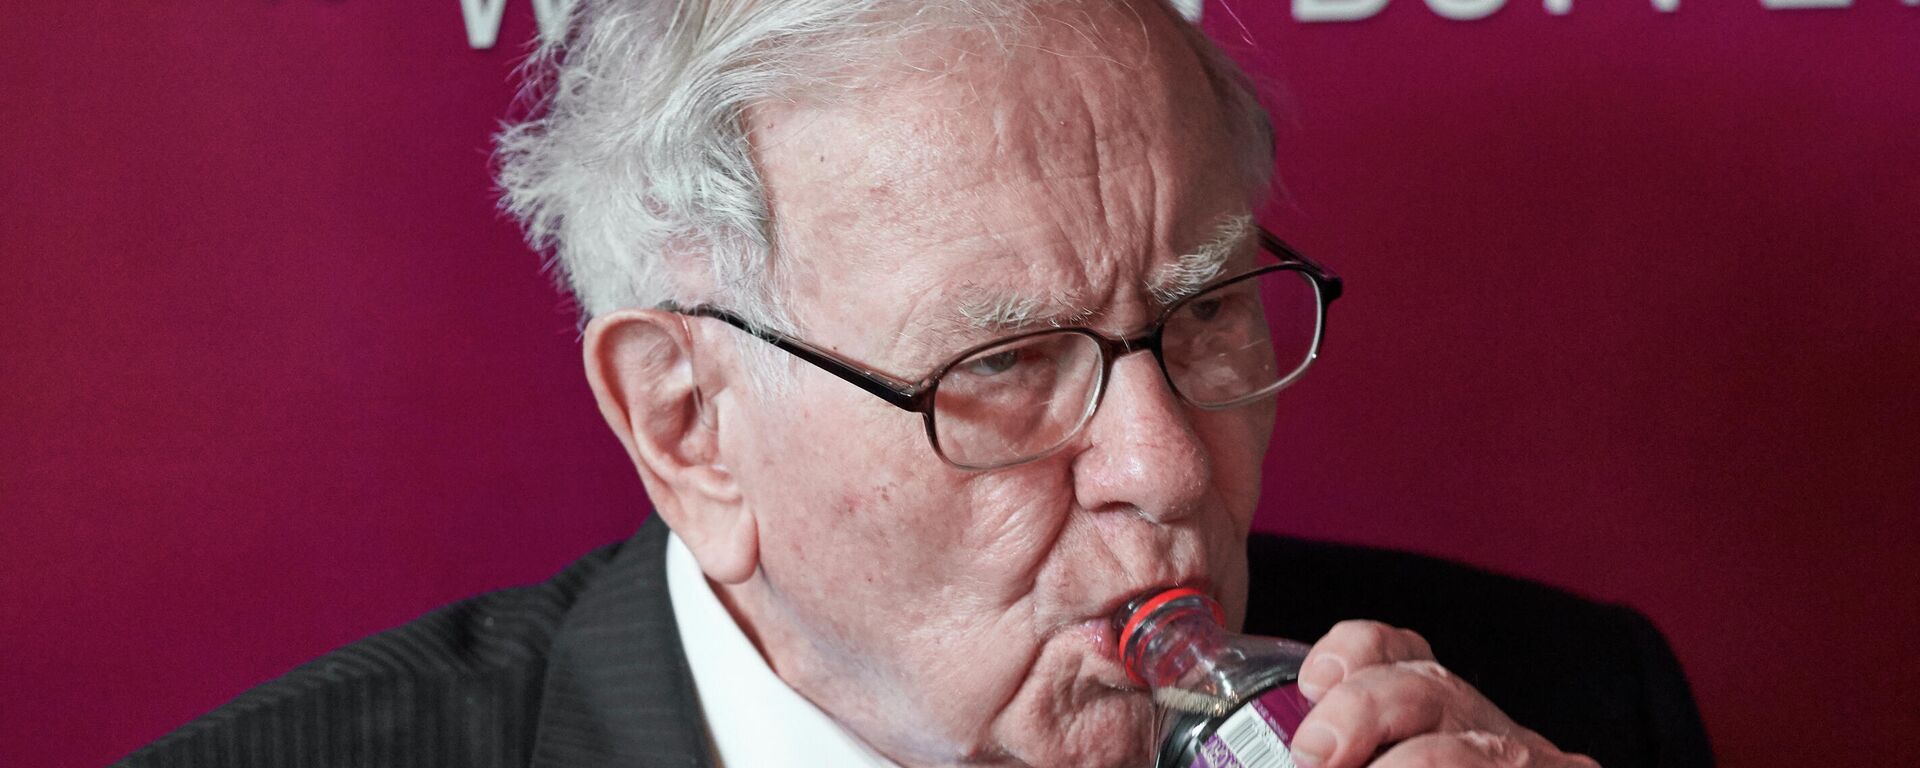 El inversor Warren Buffett, disfrutando de una Coca-Cola en 2019 - Sputnik Mundo, 1920, 24.07.2021